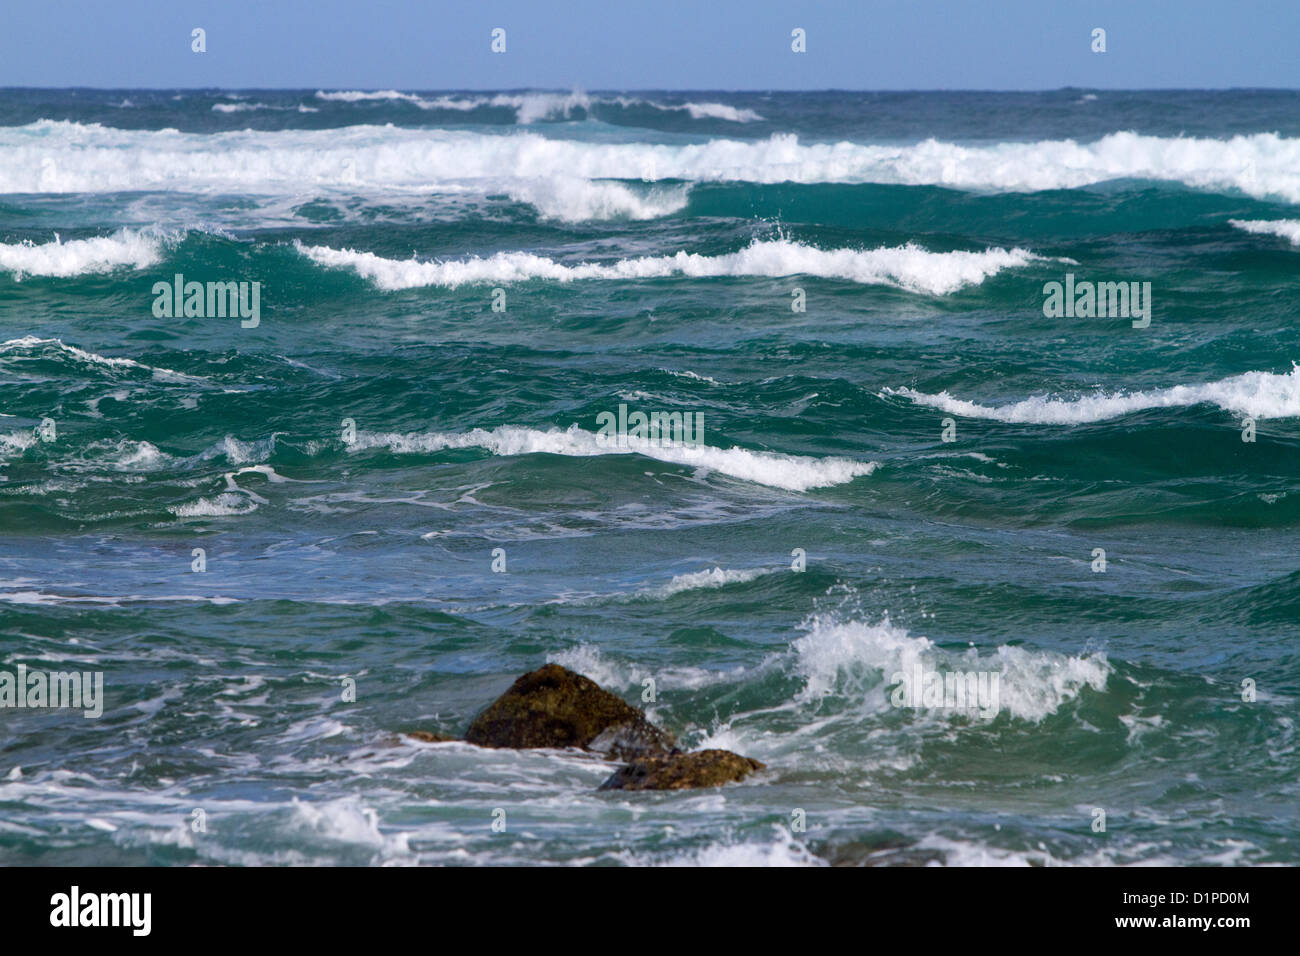 Pacific ocean waves off the island coast of Kauai, Hawaii, USA. Stock Photo